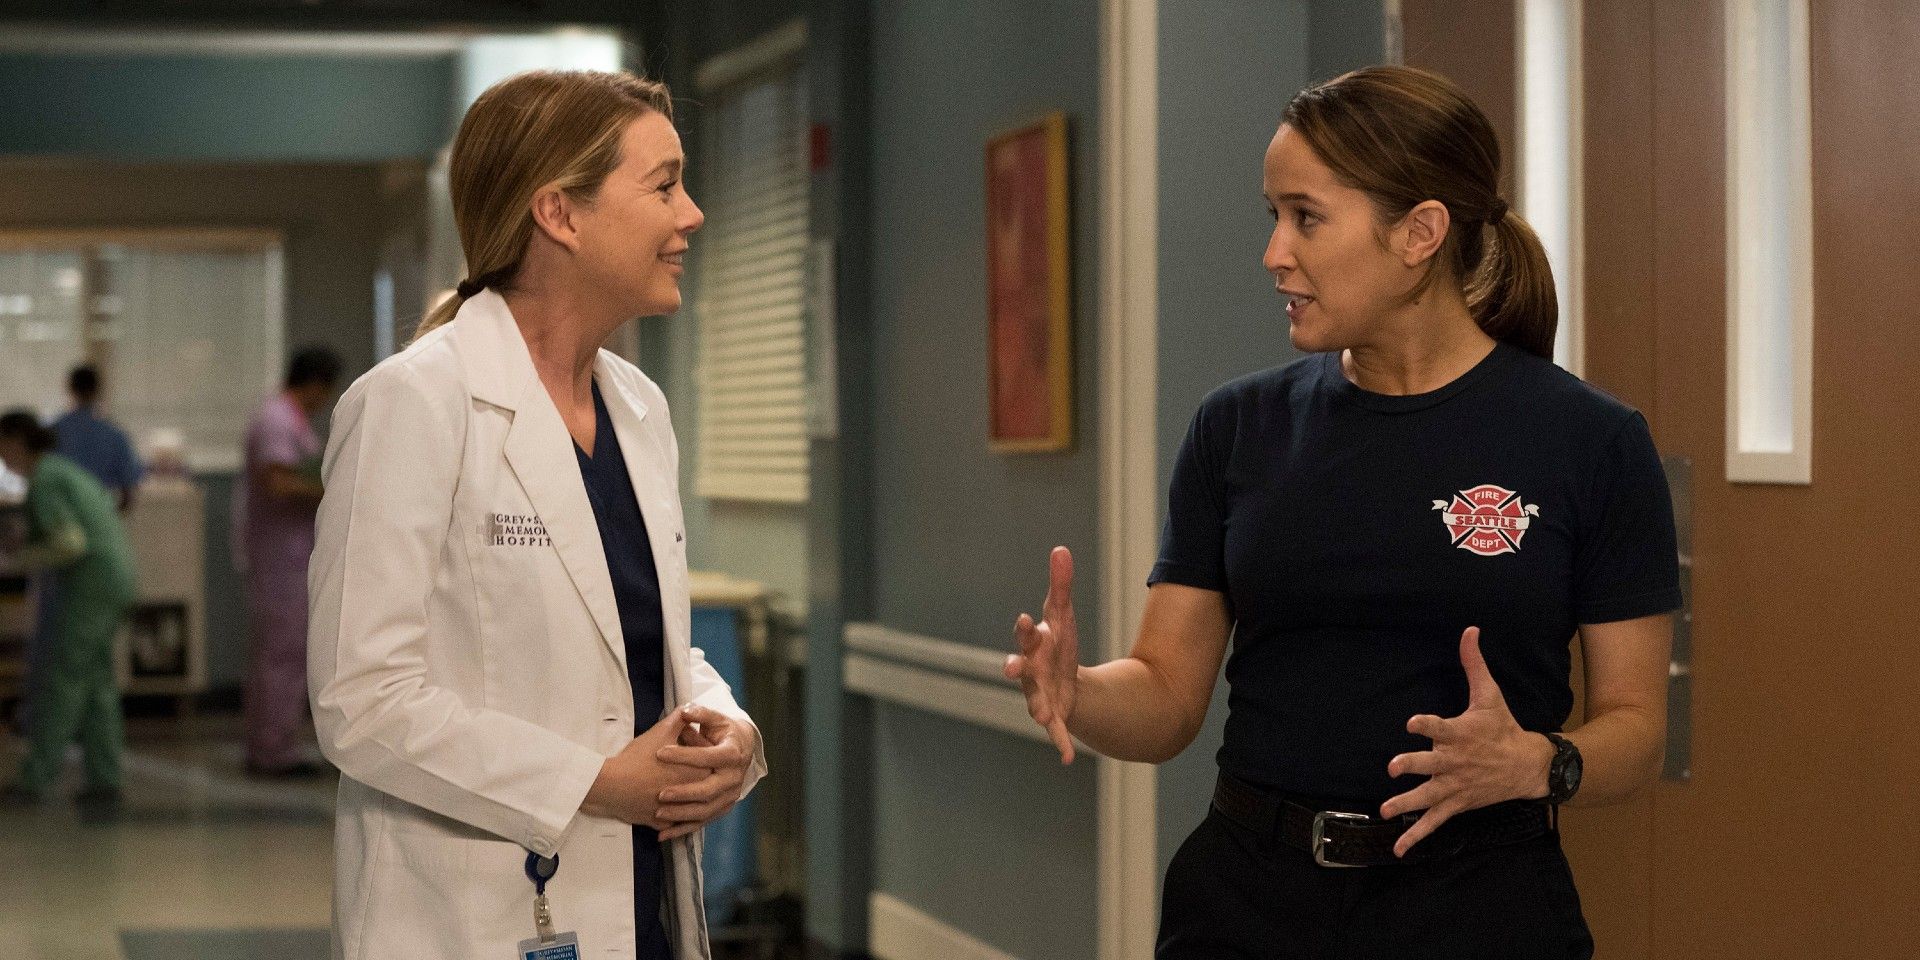 Andy Herrera and Meredith Grey talking in a corridor in Grey's Anatomy